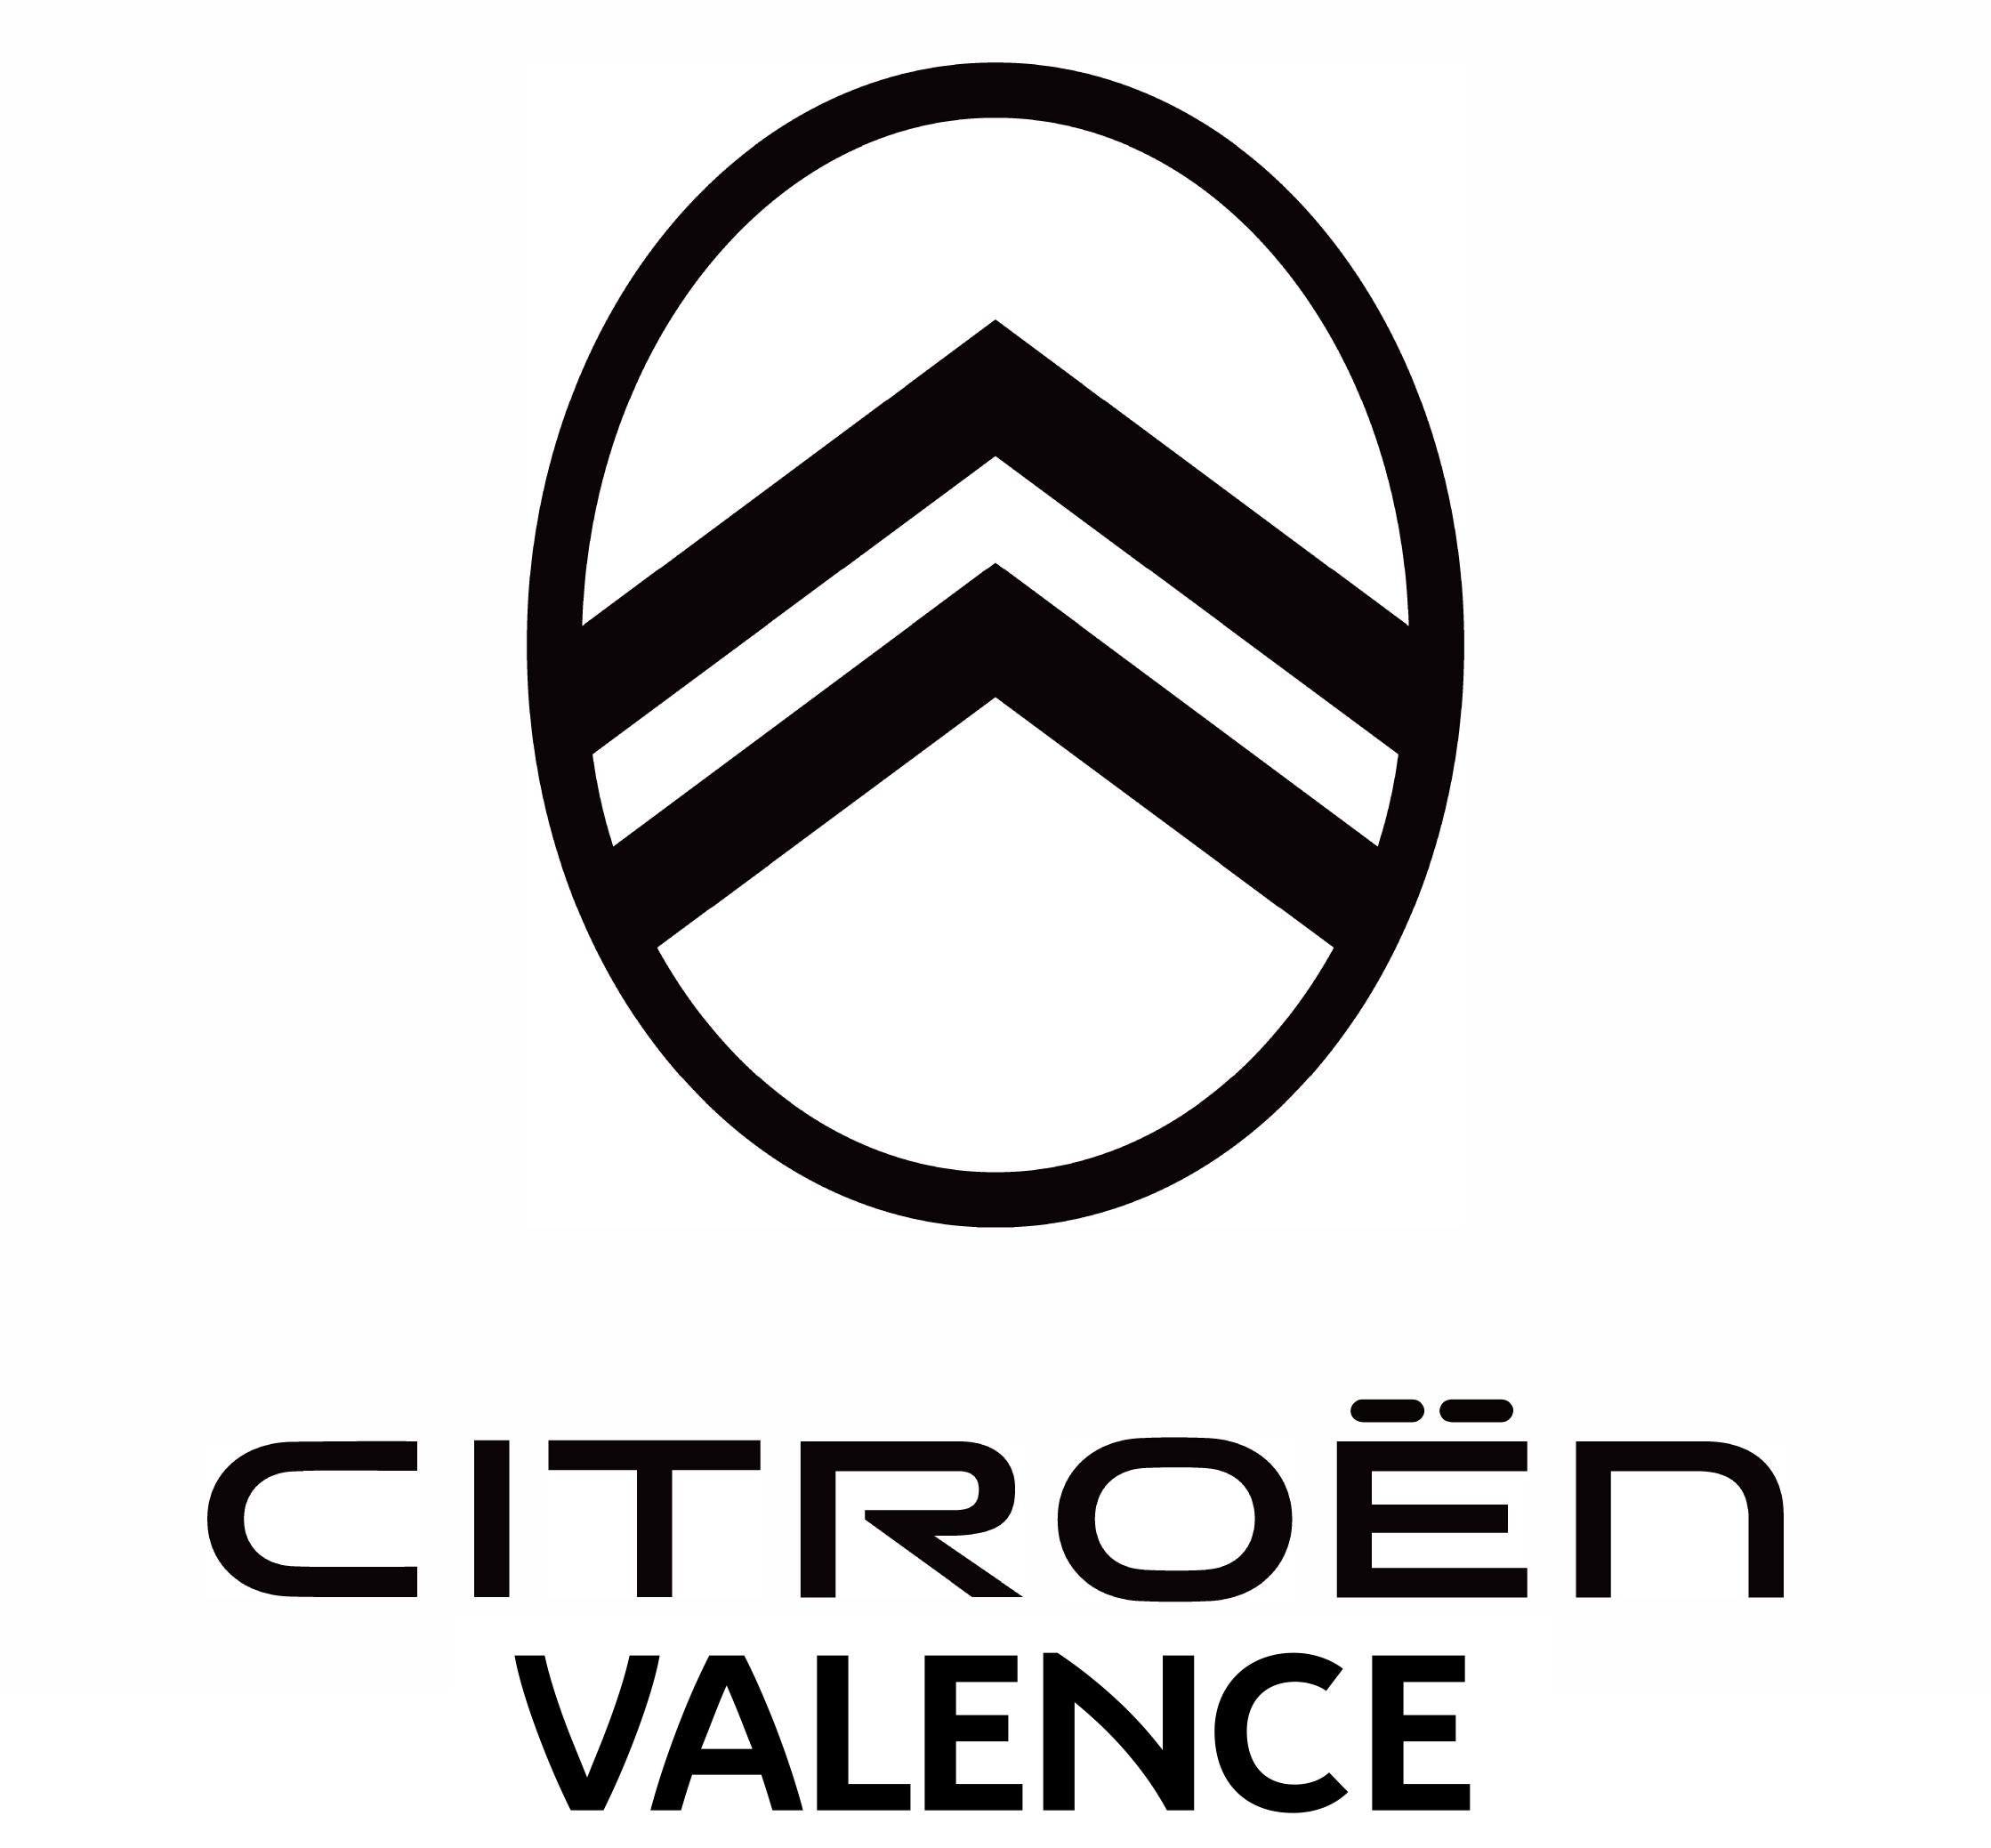 Citroen Valence